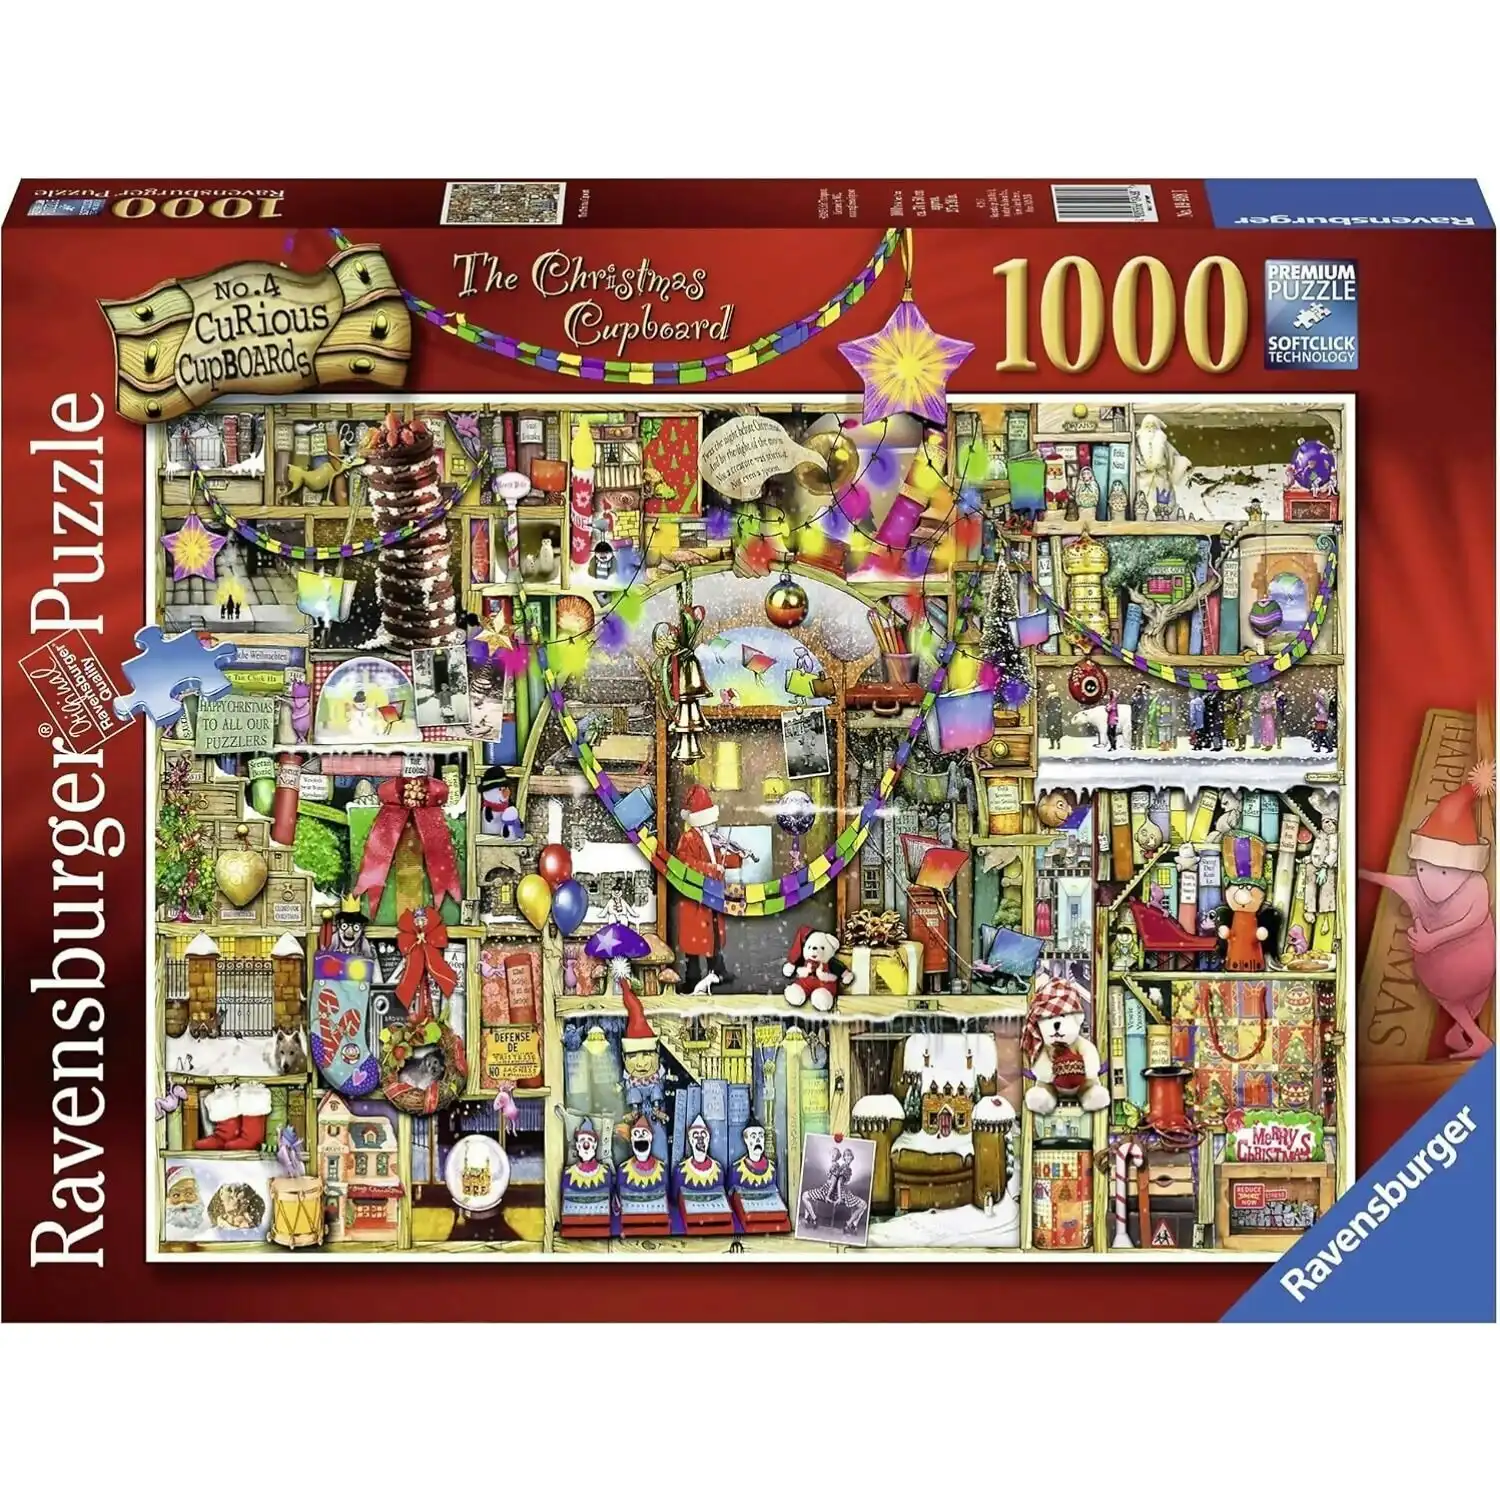 Ravensburger - No.4 Christmas Cupboard Puzzle 1000 Pieces Jigsaw Puzzle 1000pc